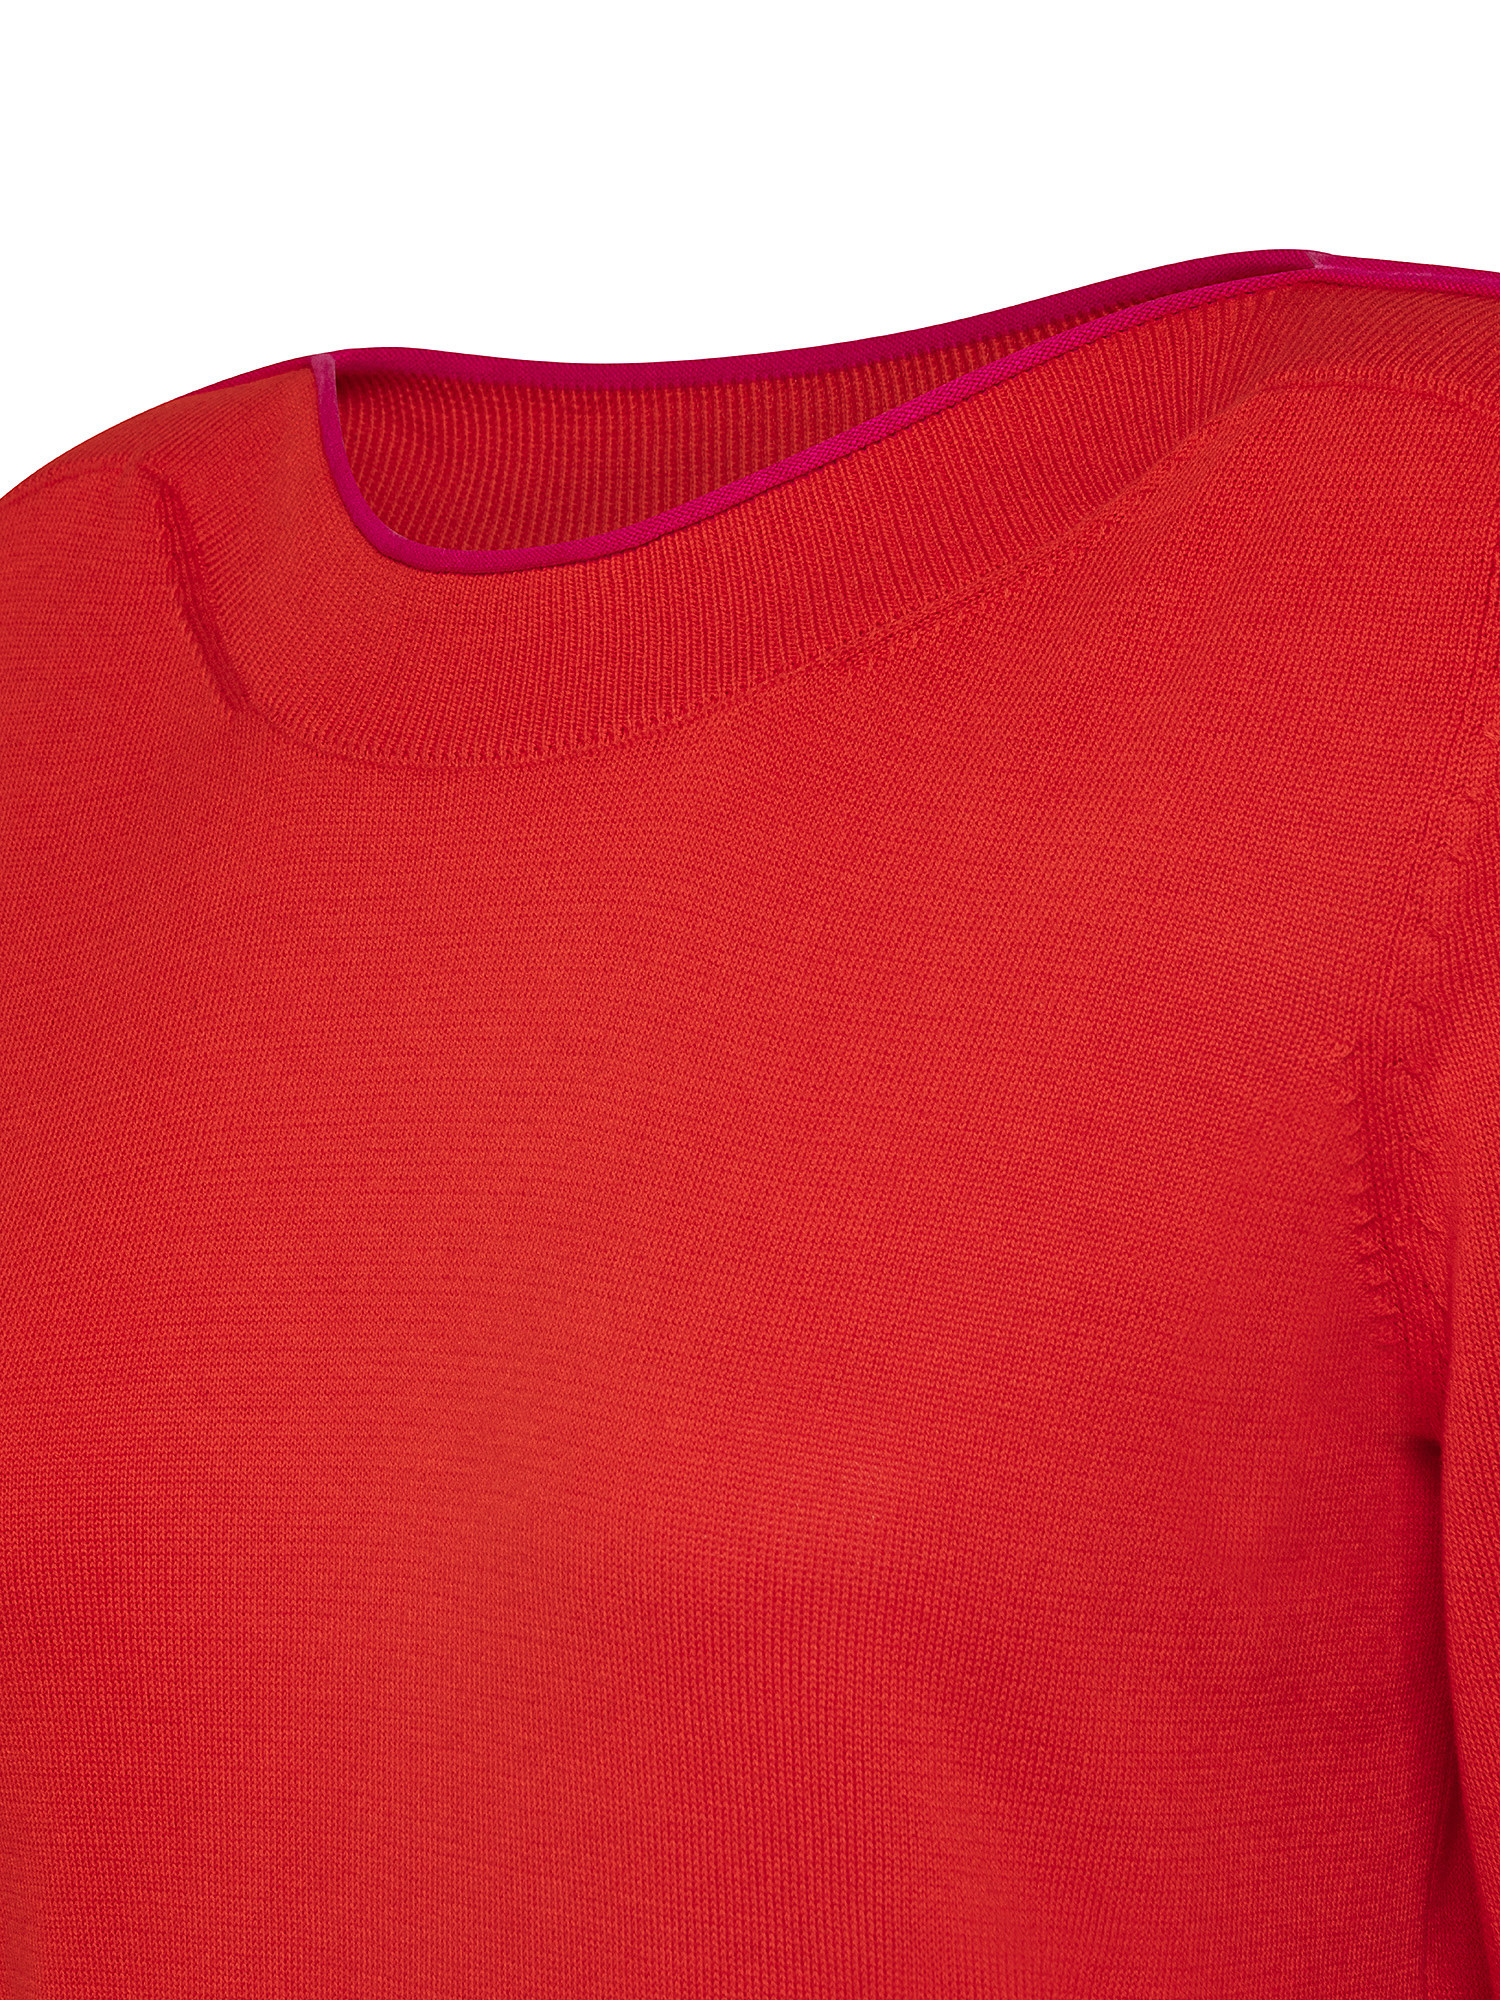 Boat neck pullover, Red, large image number 2